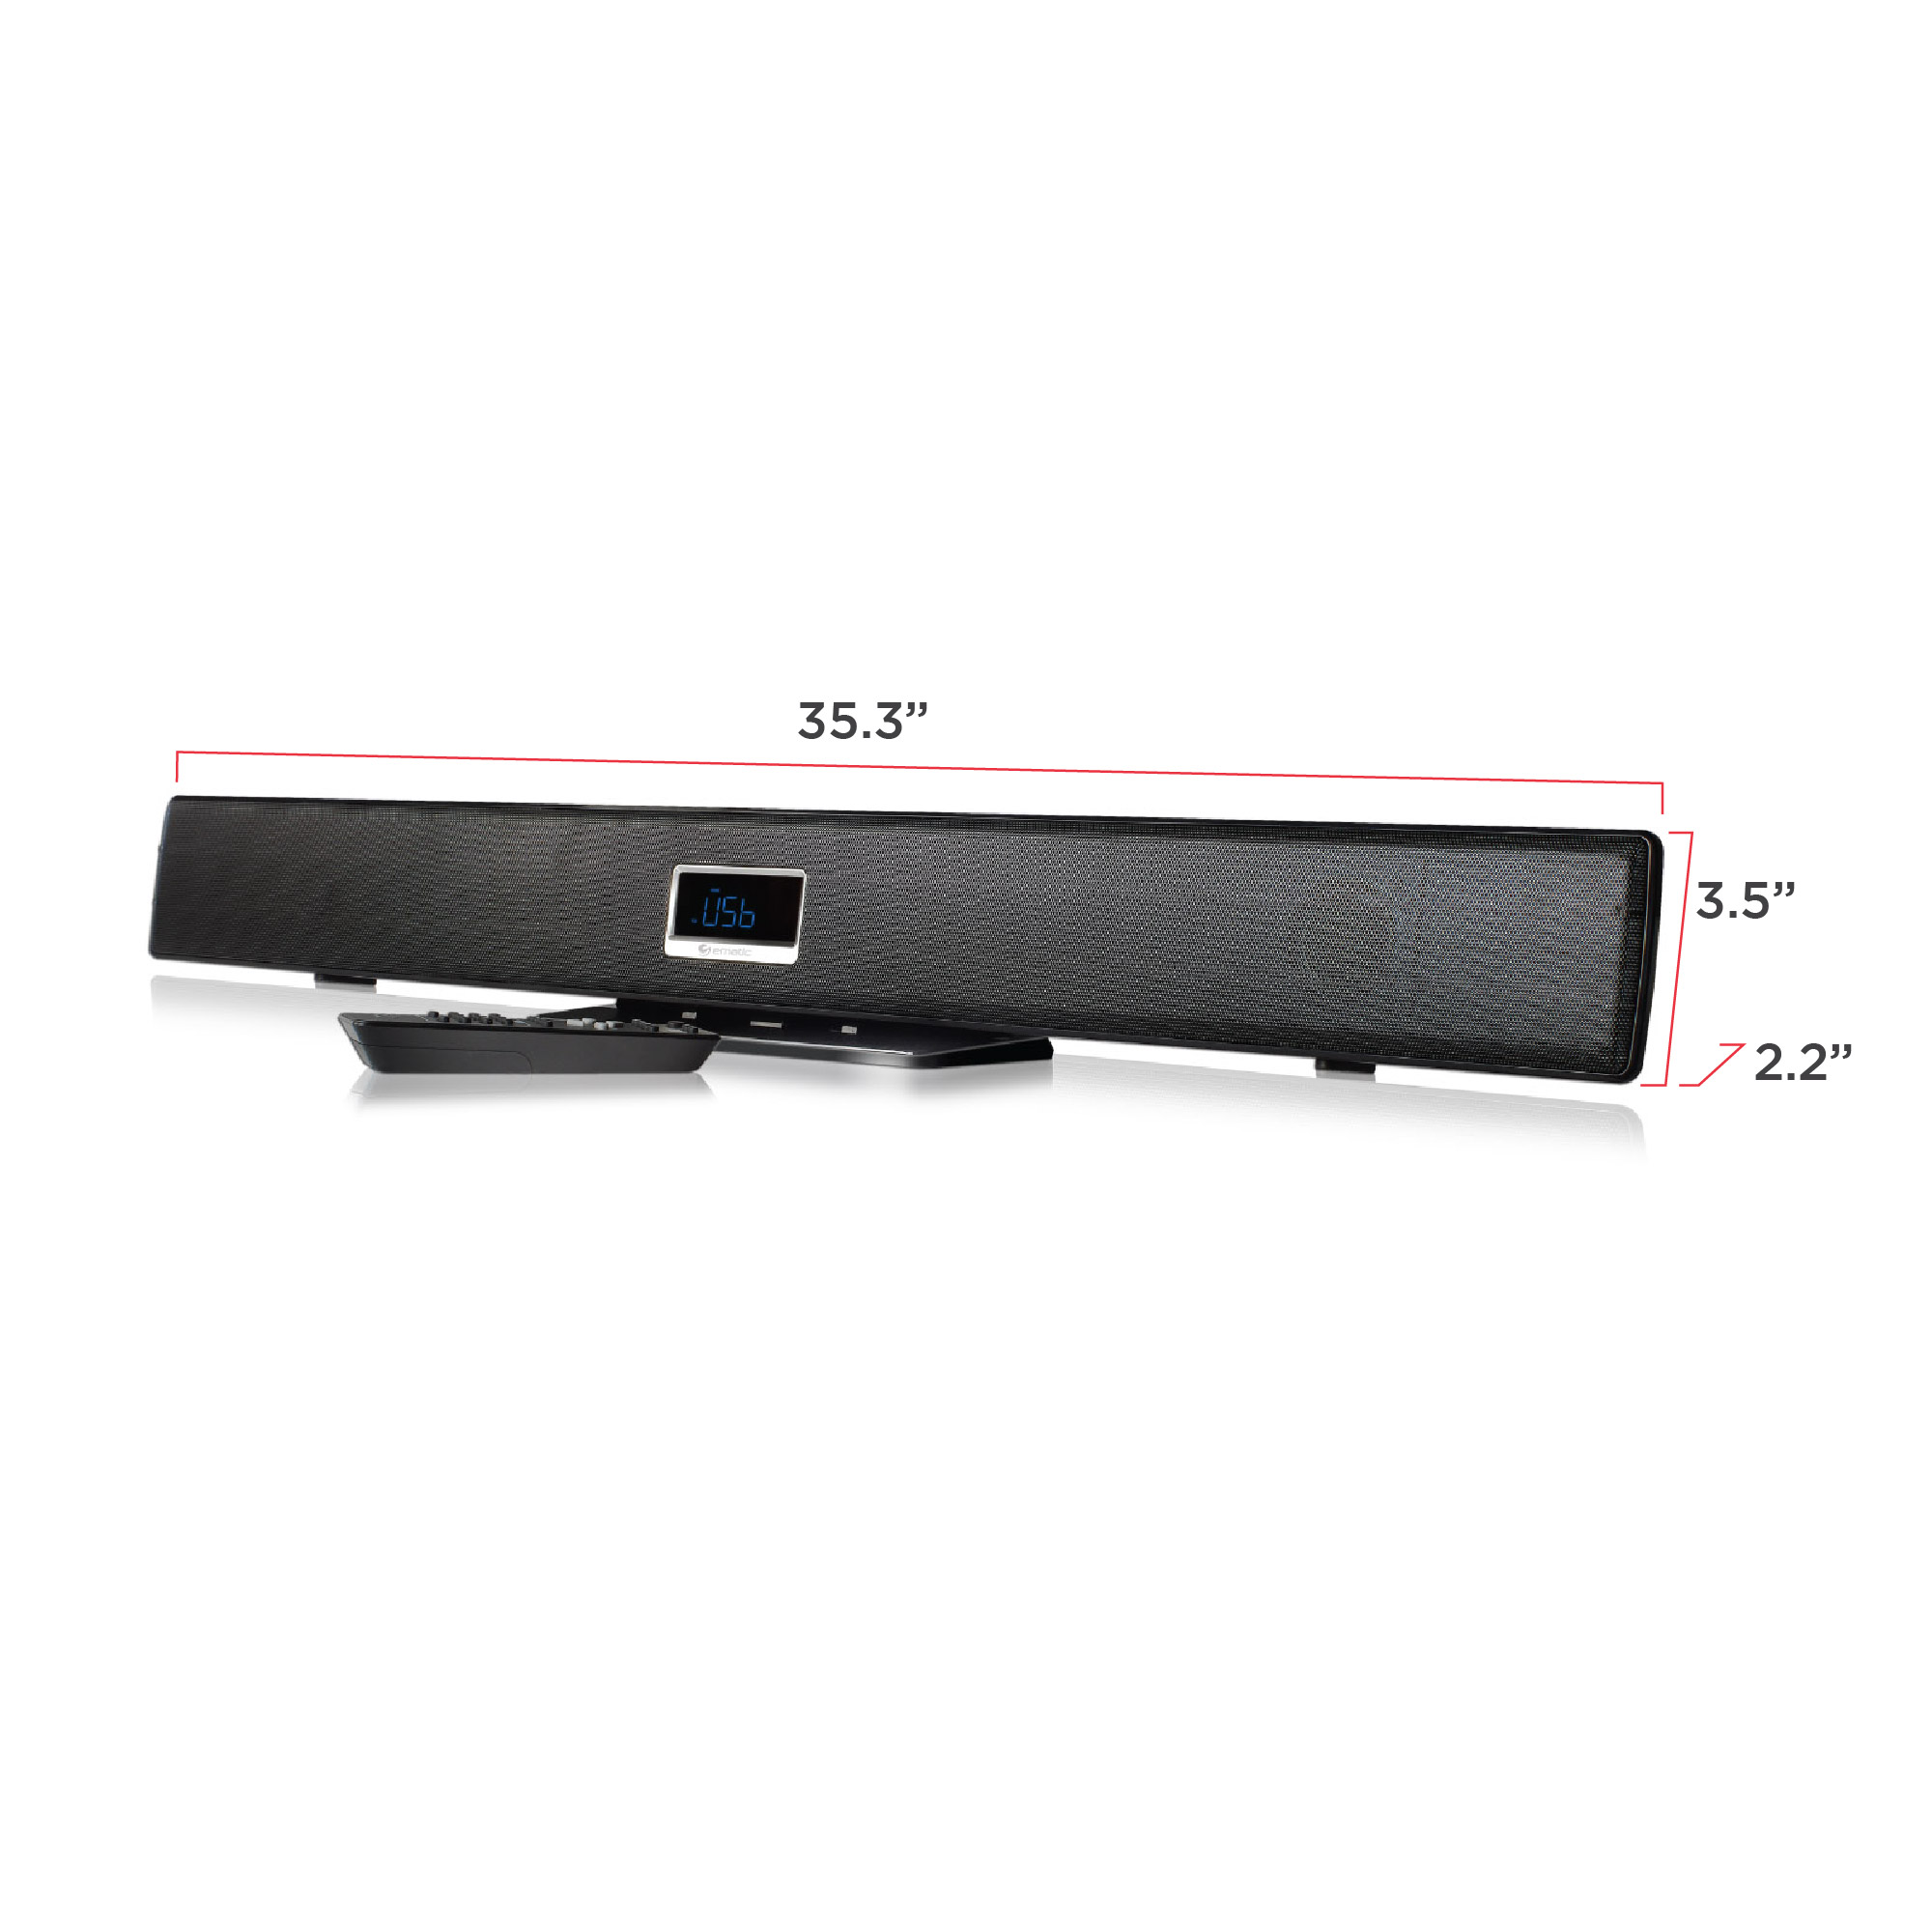 Ematic ESB210 Ultra-Slim 2.1 Channel Wireless Soundbar with Bluetooth - image 5 of 8